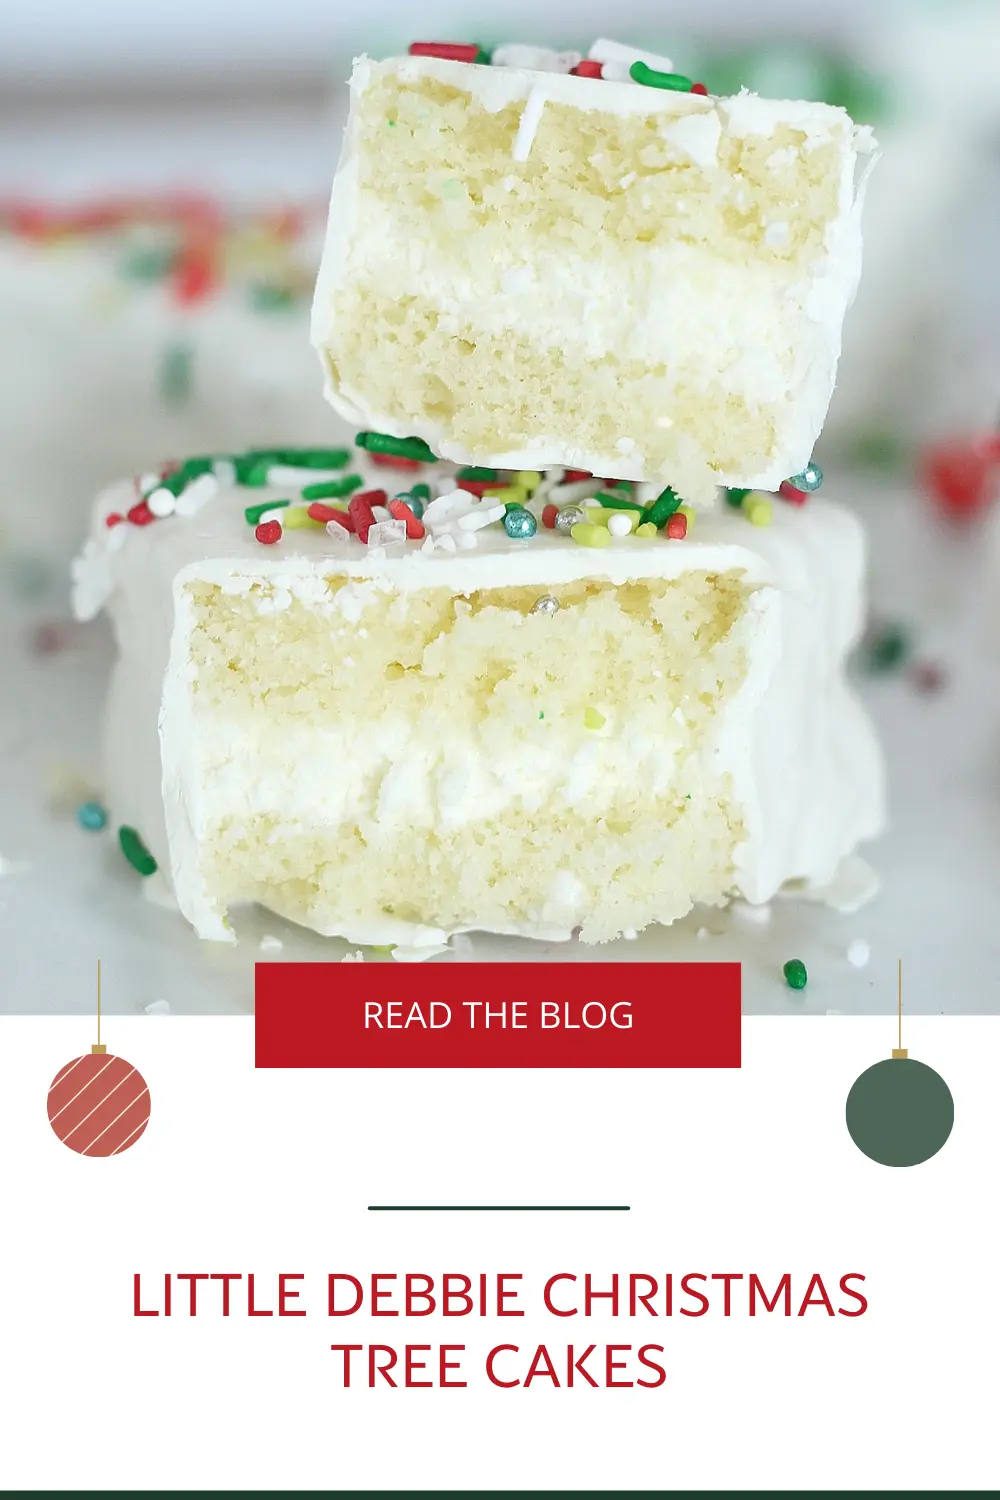 How to Make Homemade Little Debbie Christmas Tree Cakes